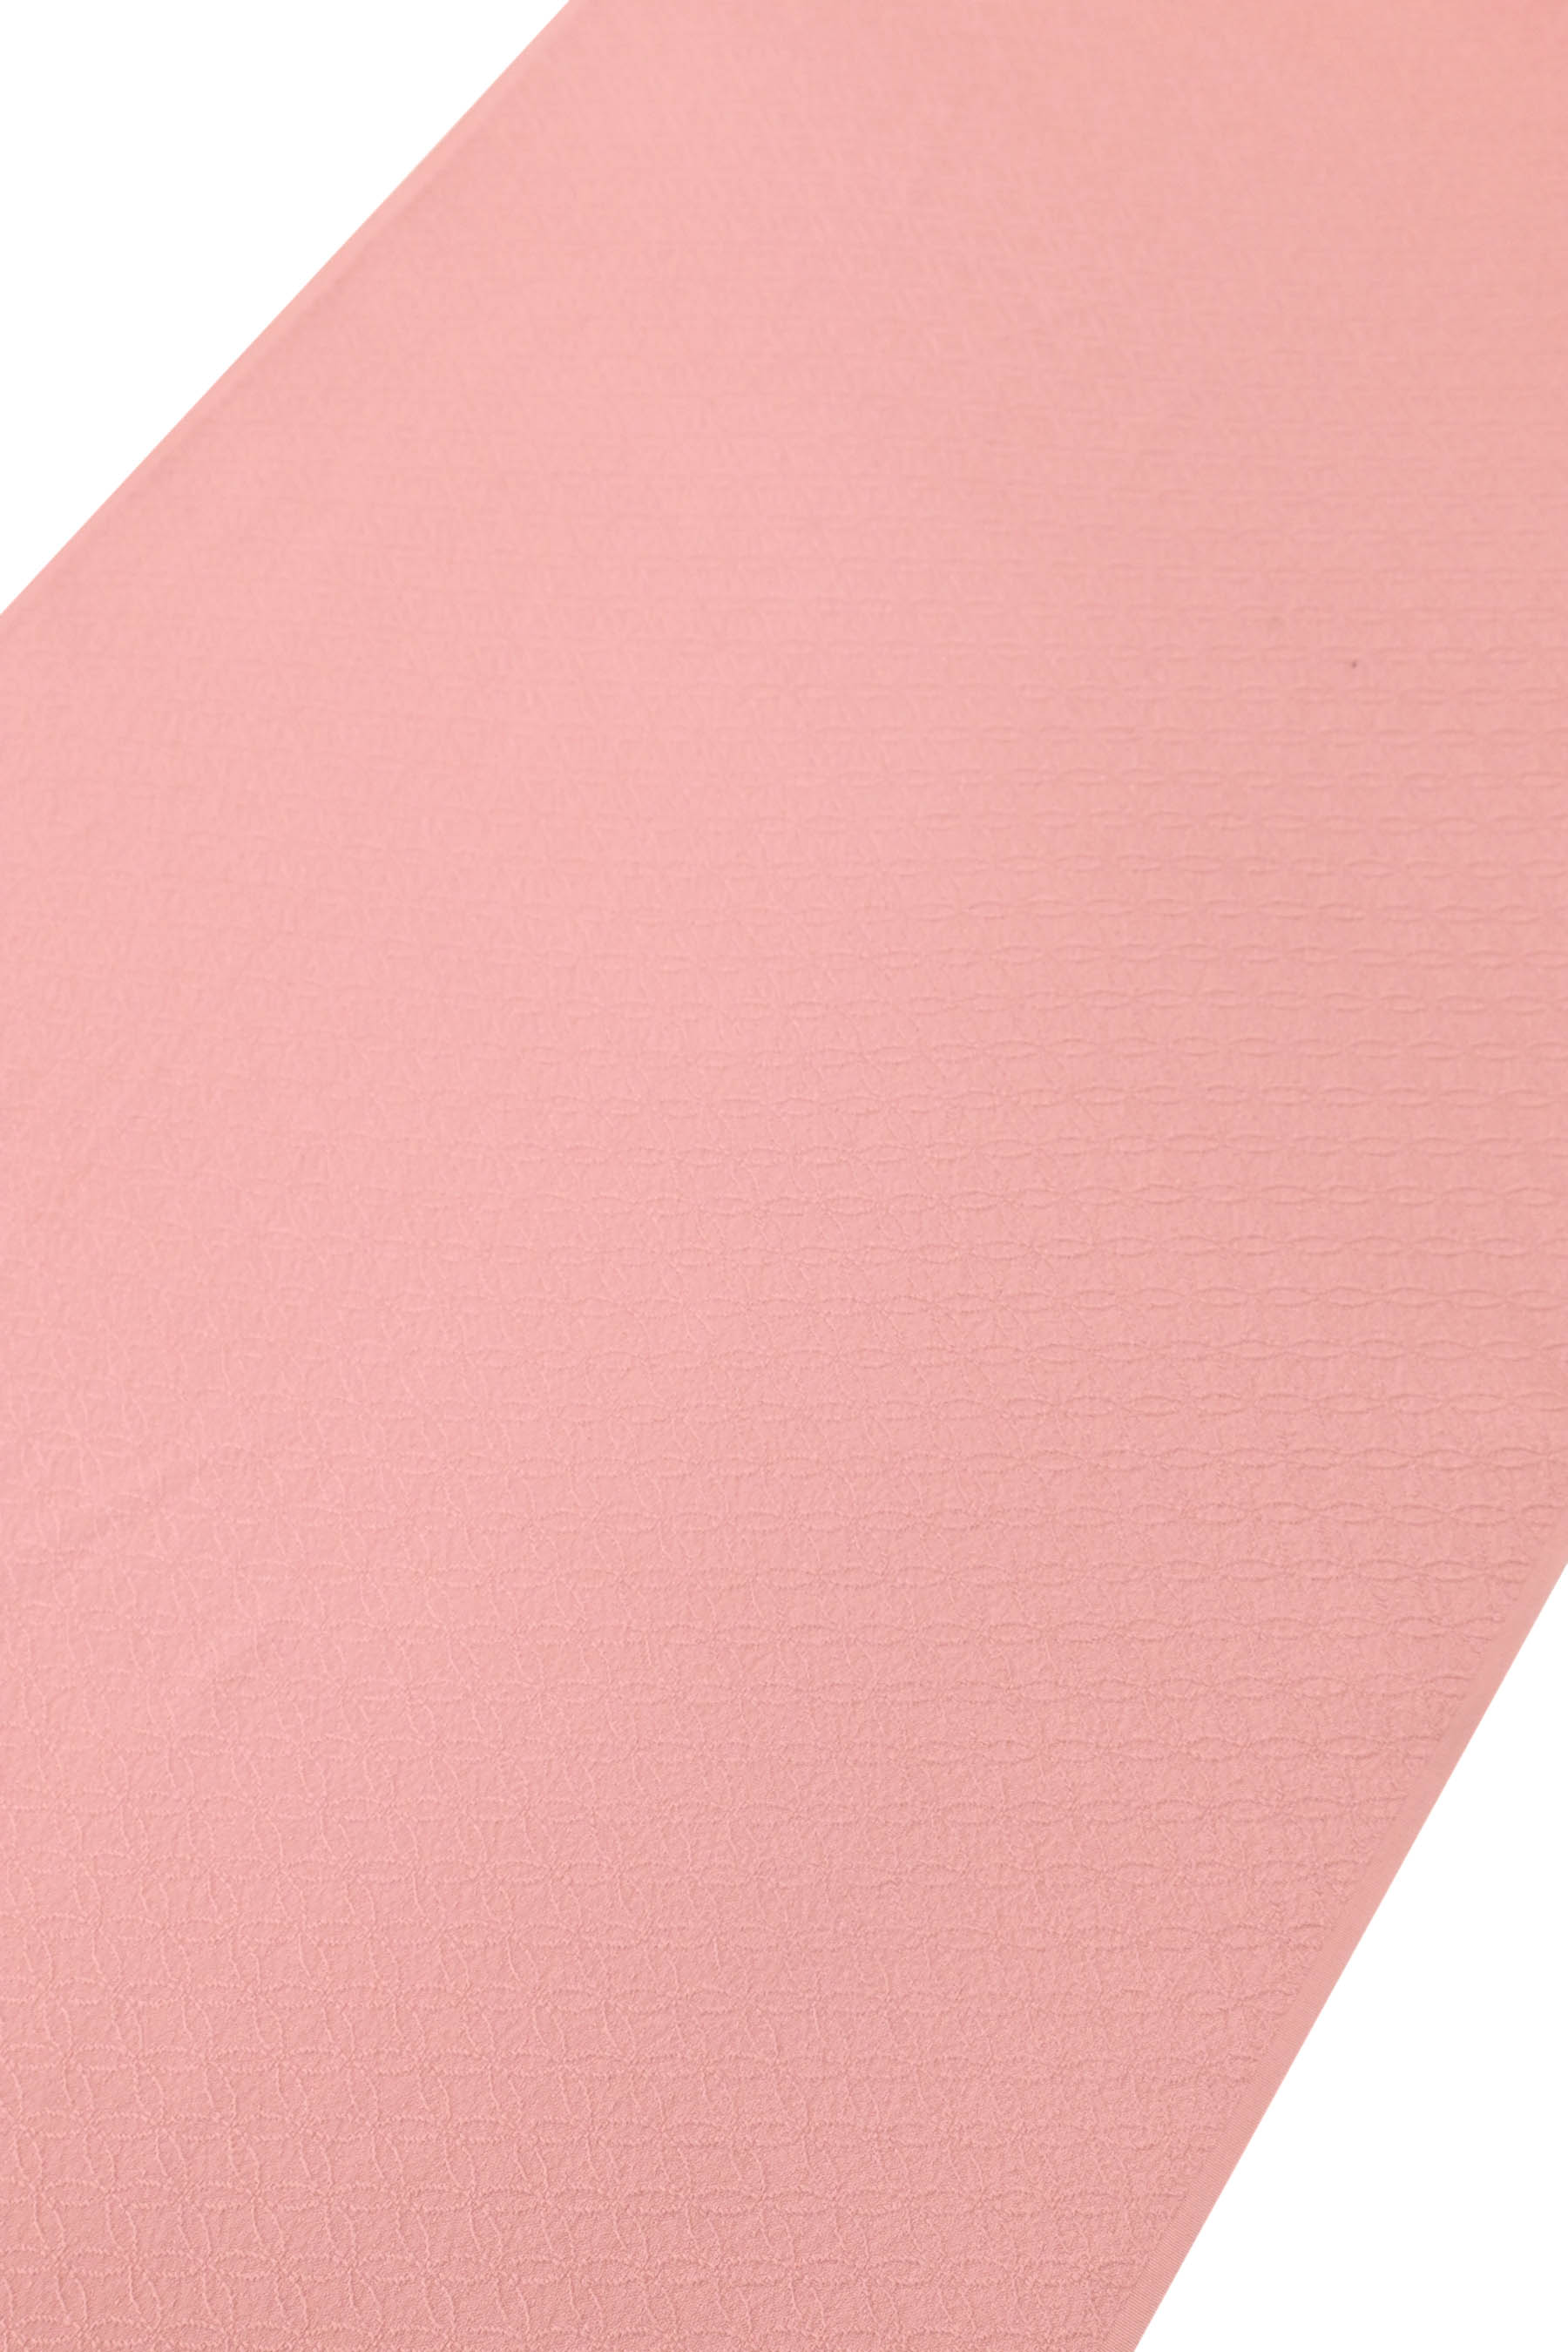 Jade Ltd. Pink Yoga Mat